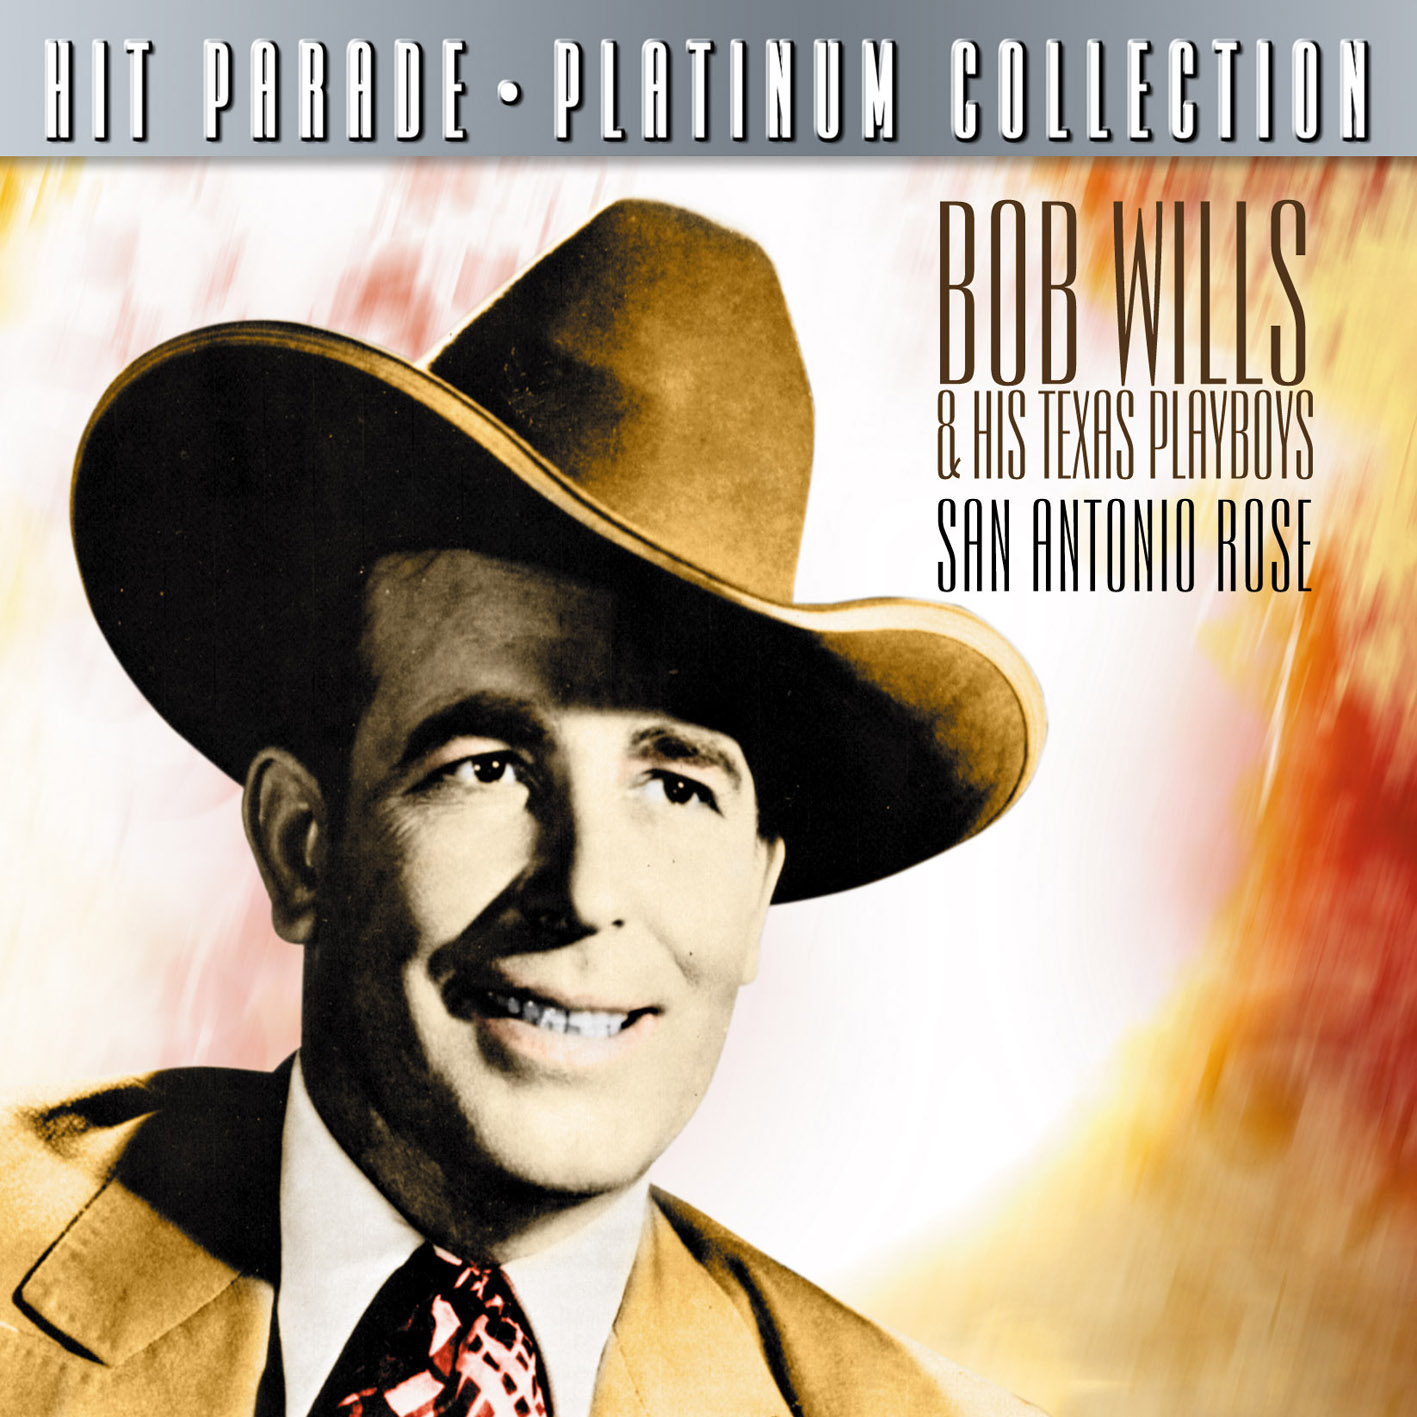 Hit Parade Platinum Collection Bob Wills